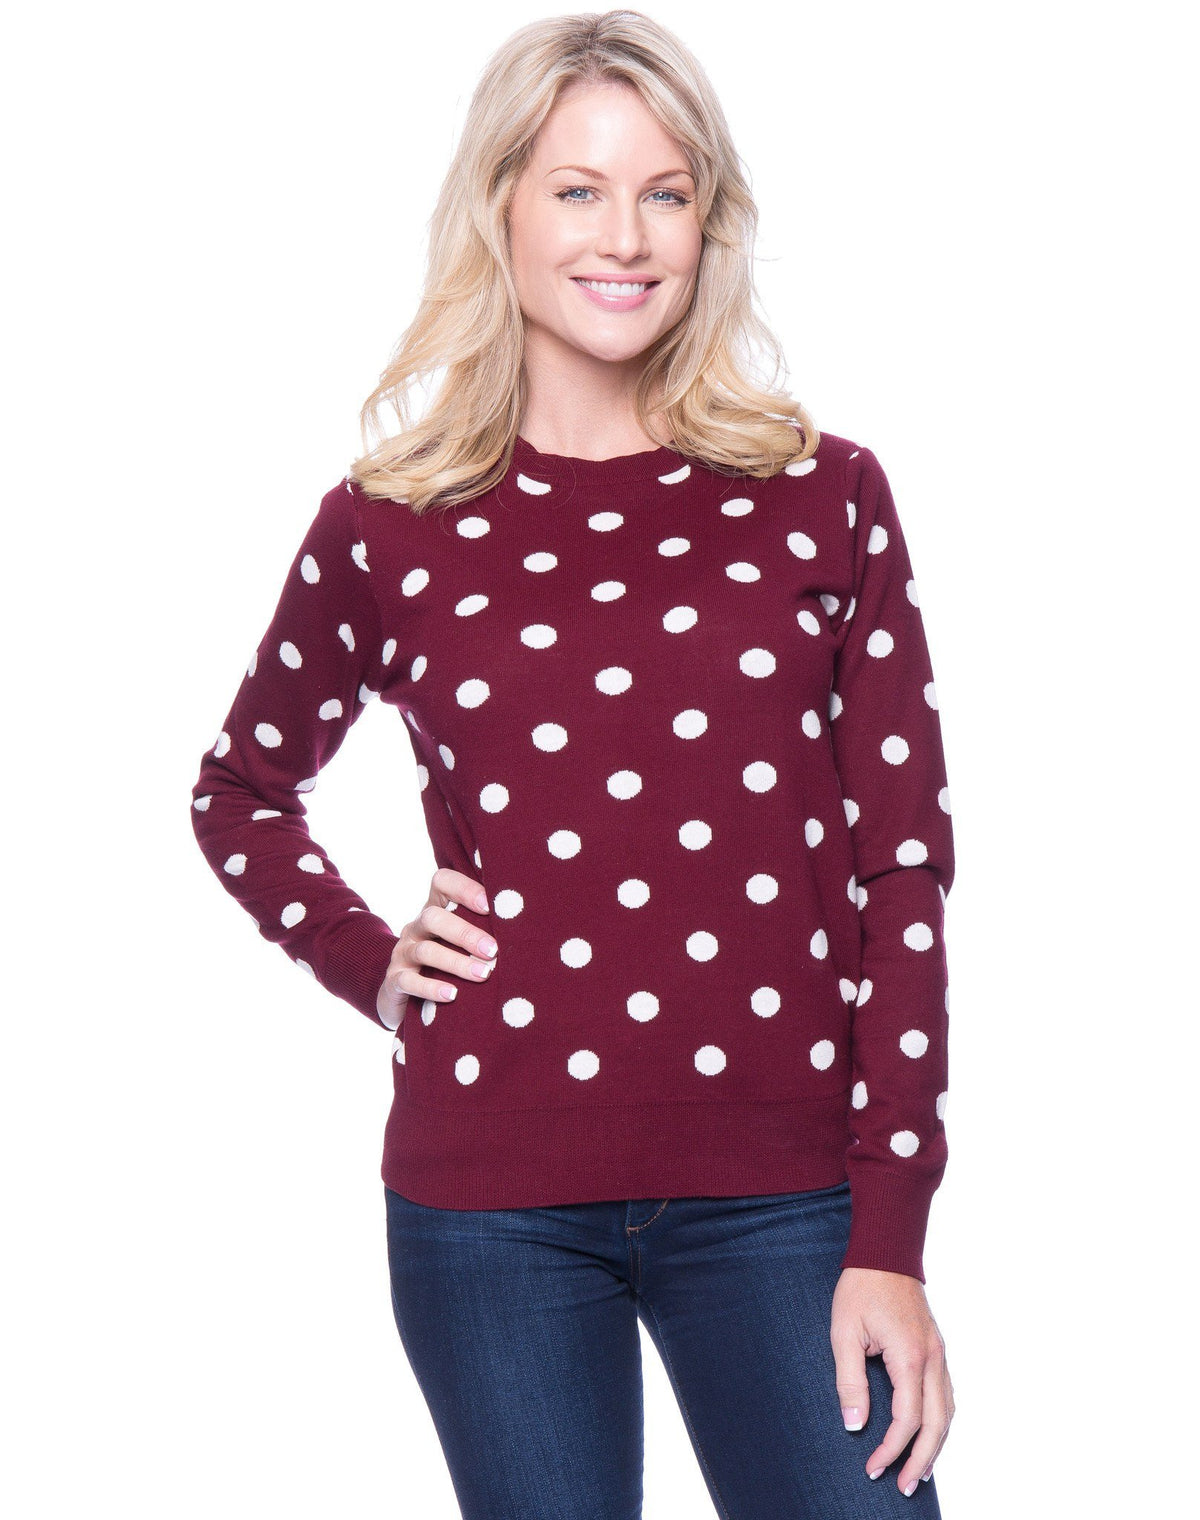 Women's Premium Cotton Crew Neck Sweater - Polka Dots Bordeaux/Ivory